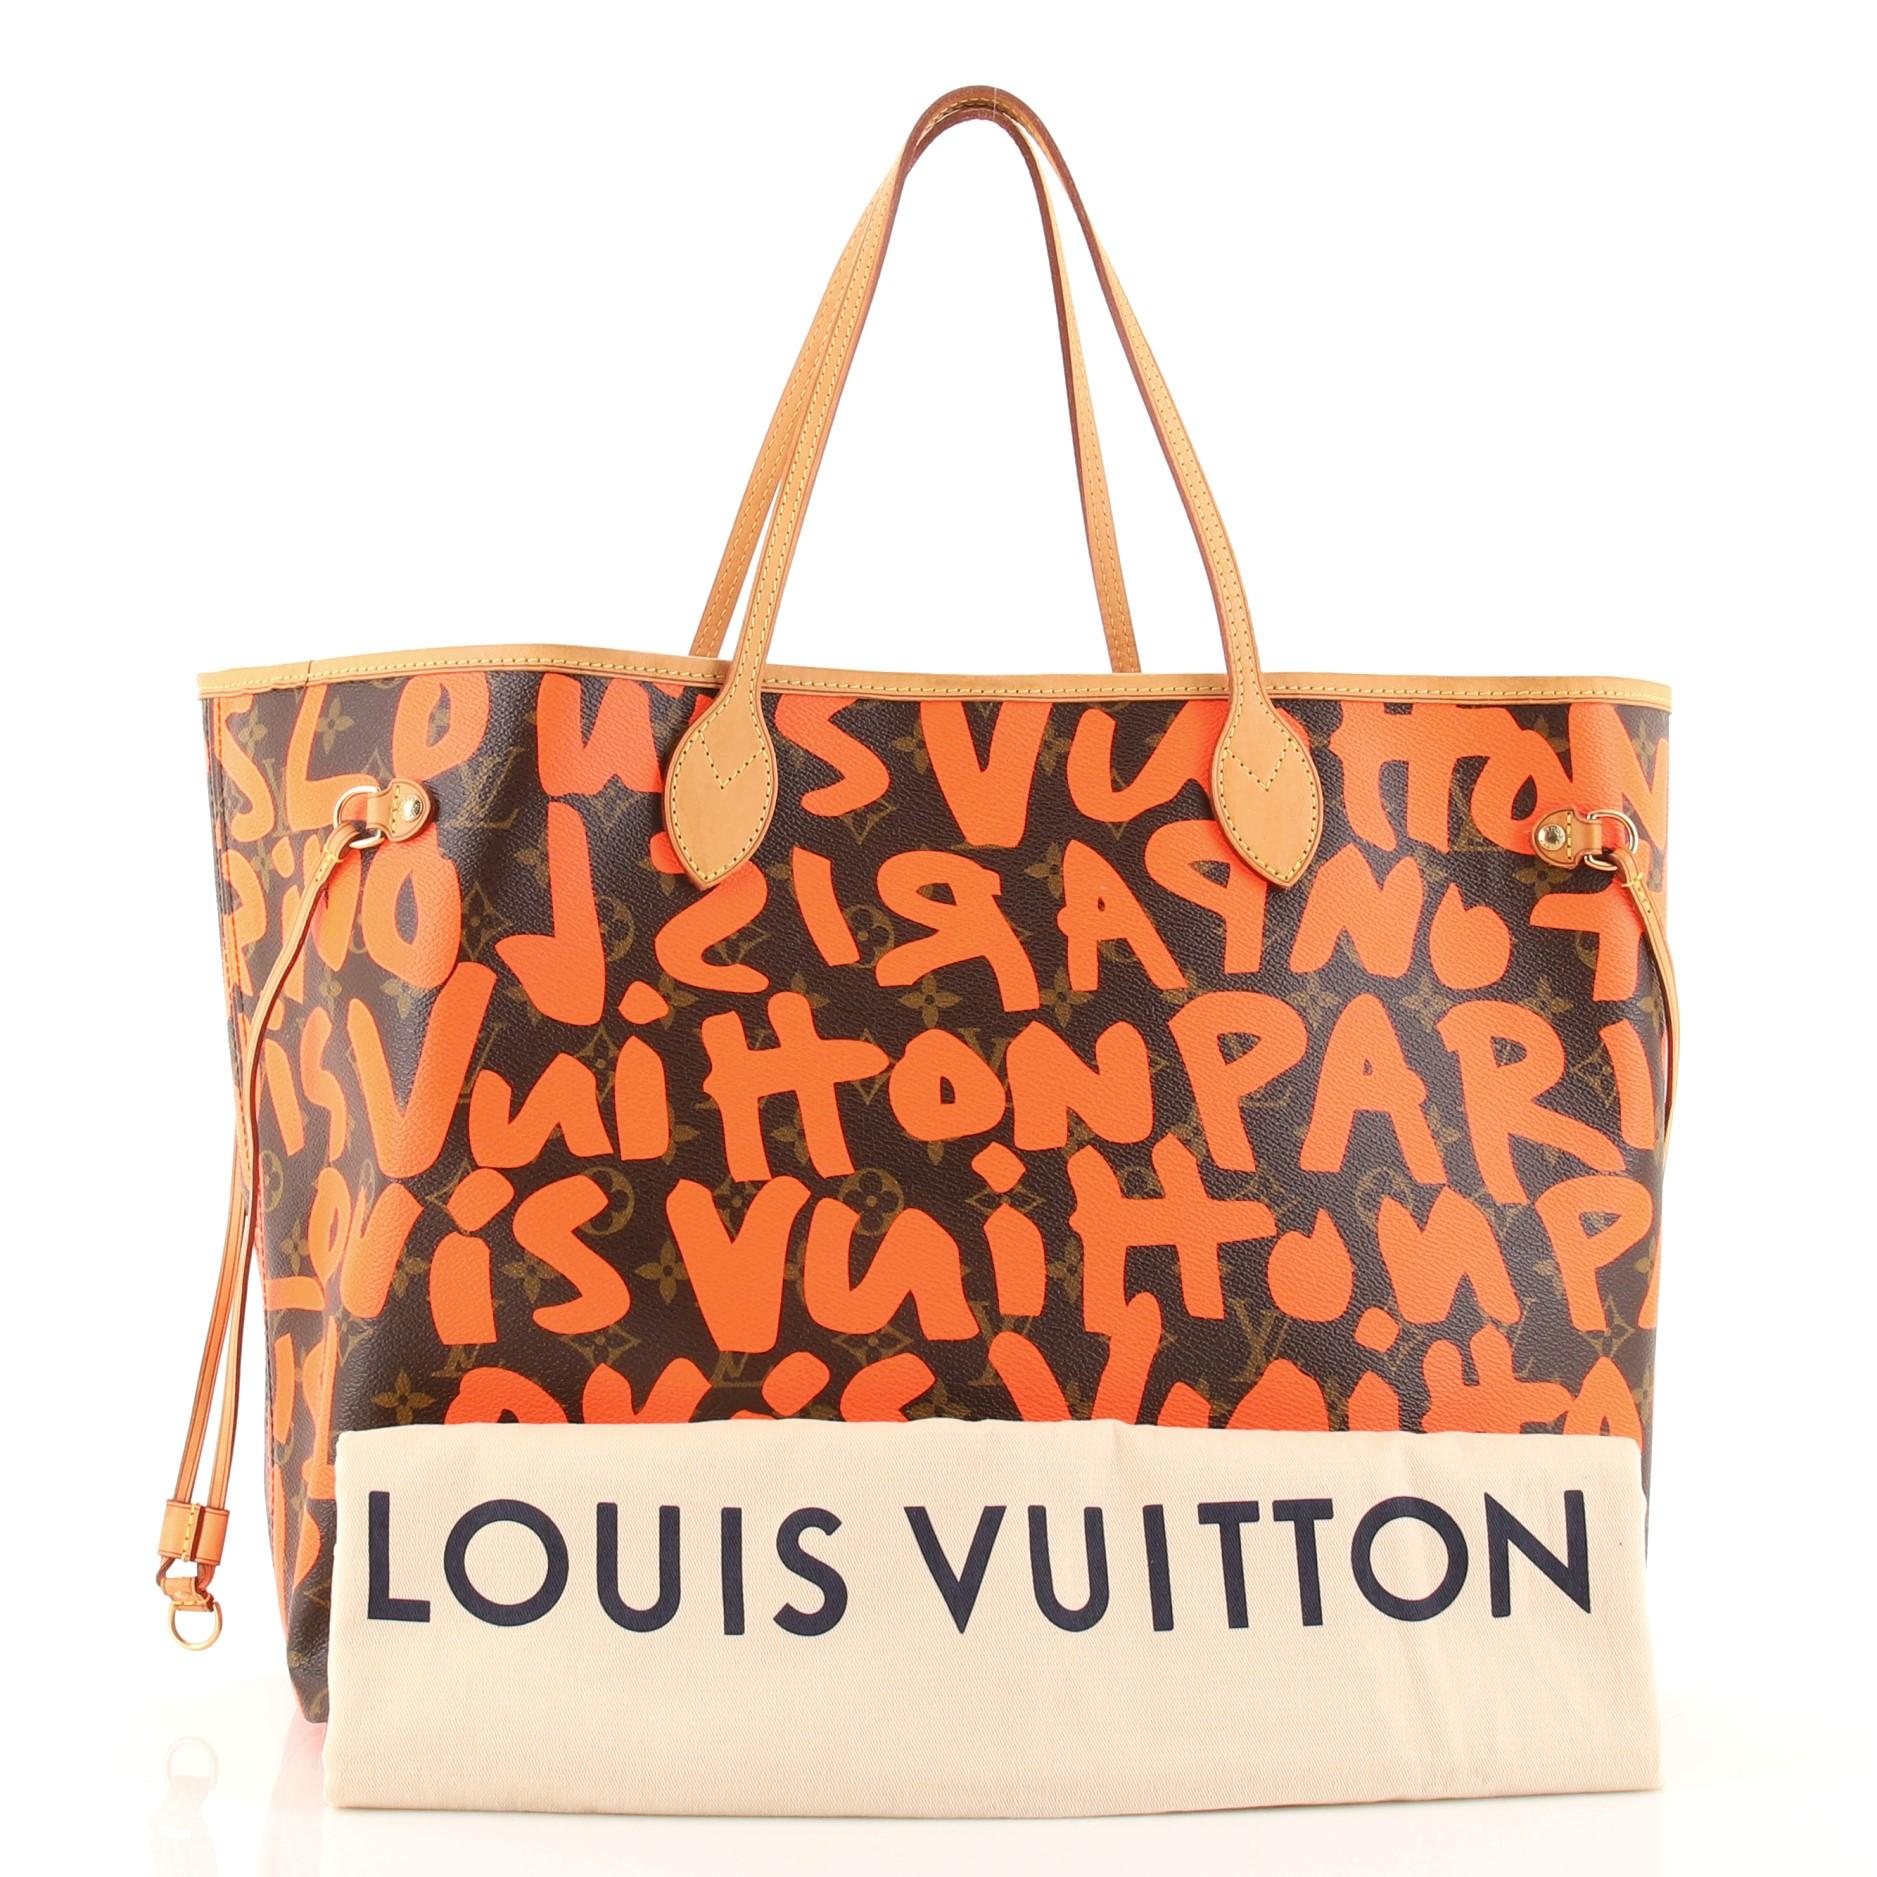 Louis Vuitton Speedy 30 - 104 For Sale on 1stDibs